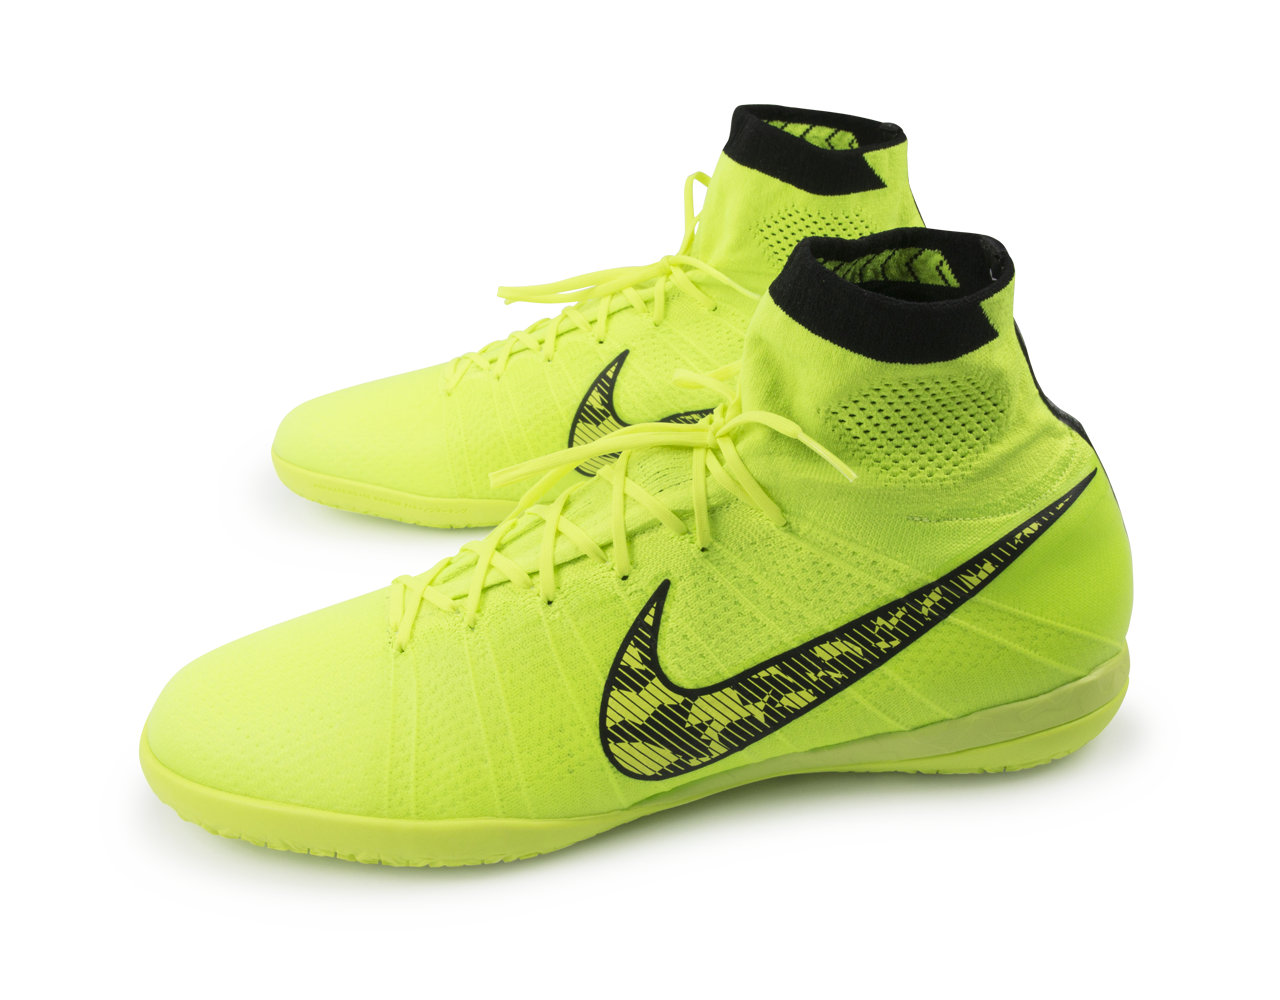 Nike Men's Elastico Superfly Indoor Soccer Shoes Soccer Shoes Azteca Soccer